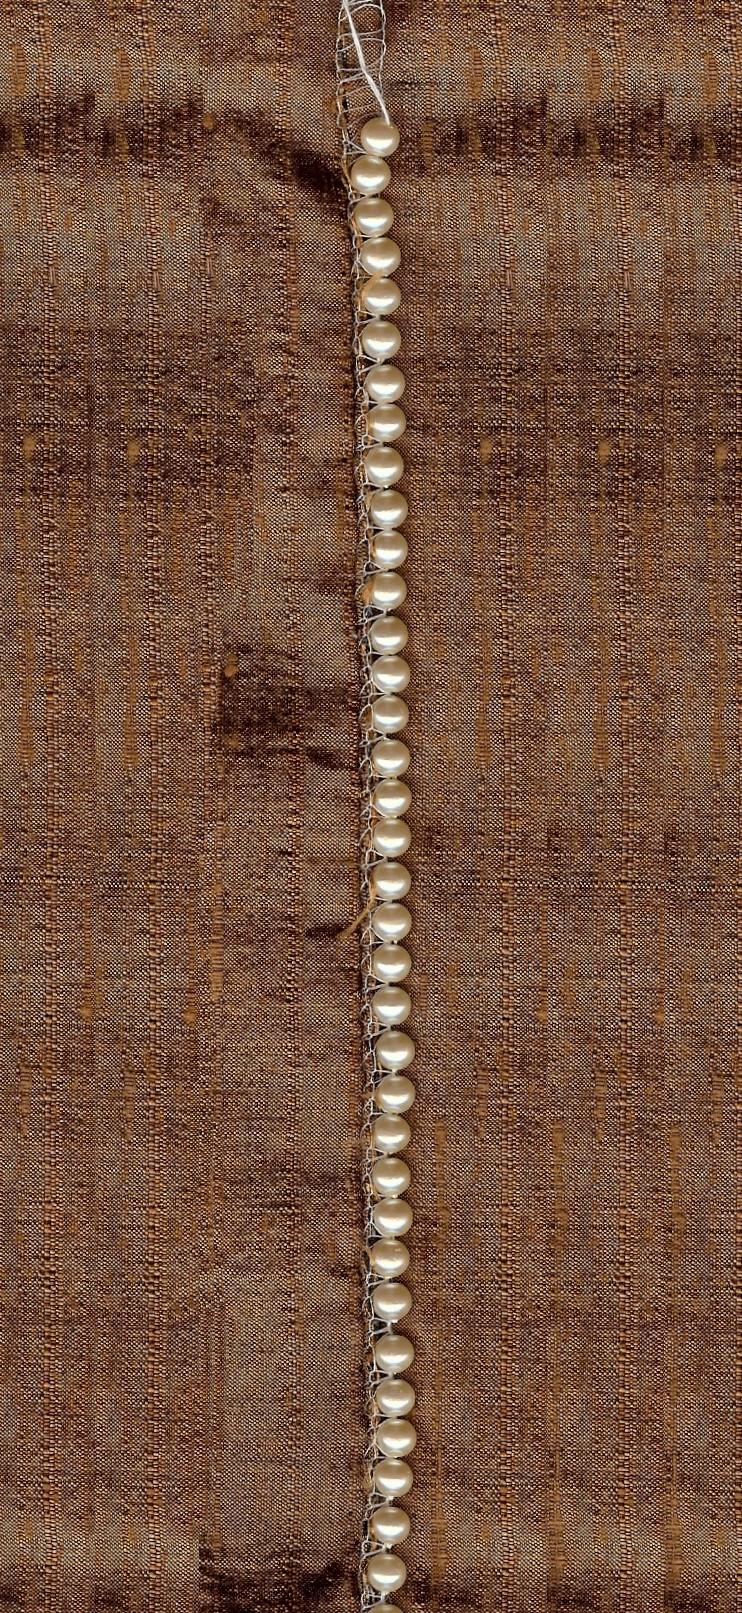 BERNINA Multi-Purpose Foot: Beading Fabric: Medium weight cotton, 4 x 8 10 length of 4mm, plastic, pre-strung beads Needle: 80/12 Universal Thread: 3 cones of overlocker thread Presser Foot: